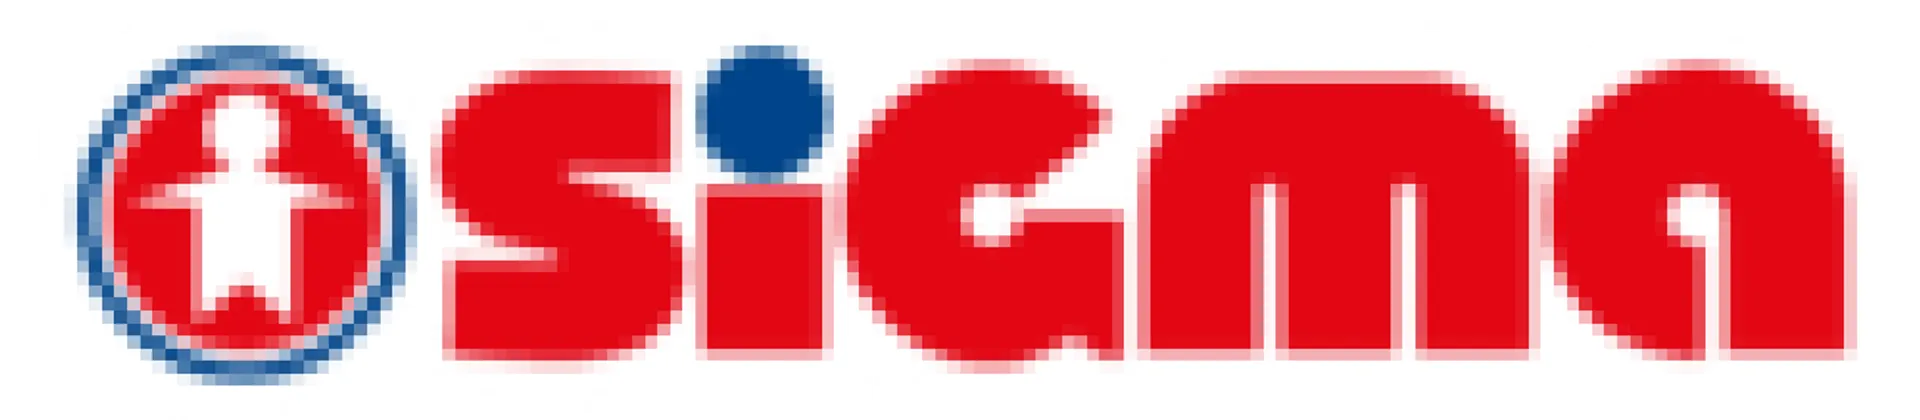 OK SIGMA logo